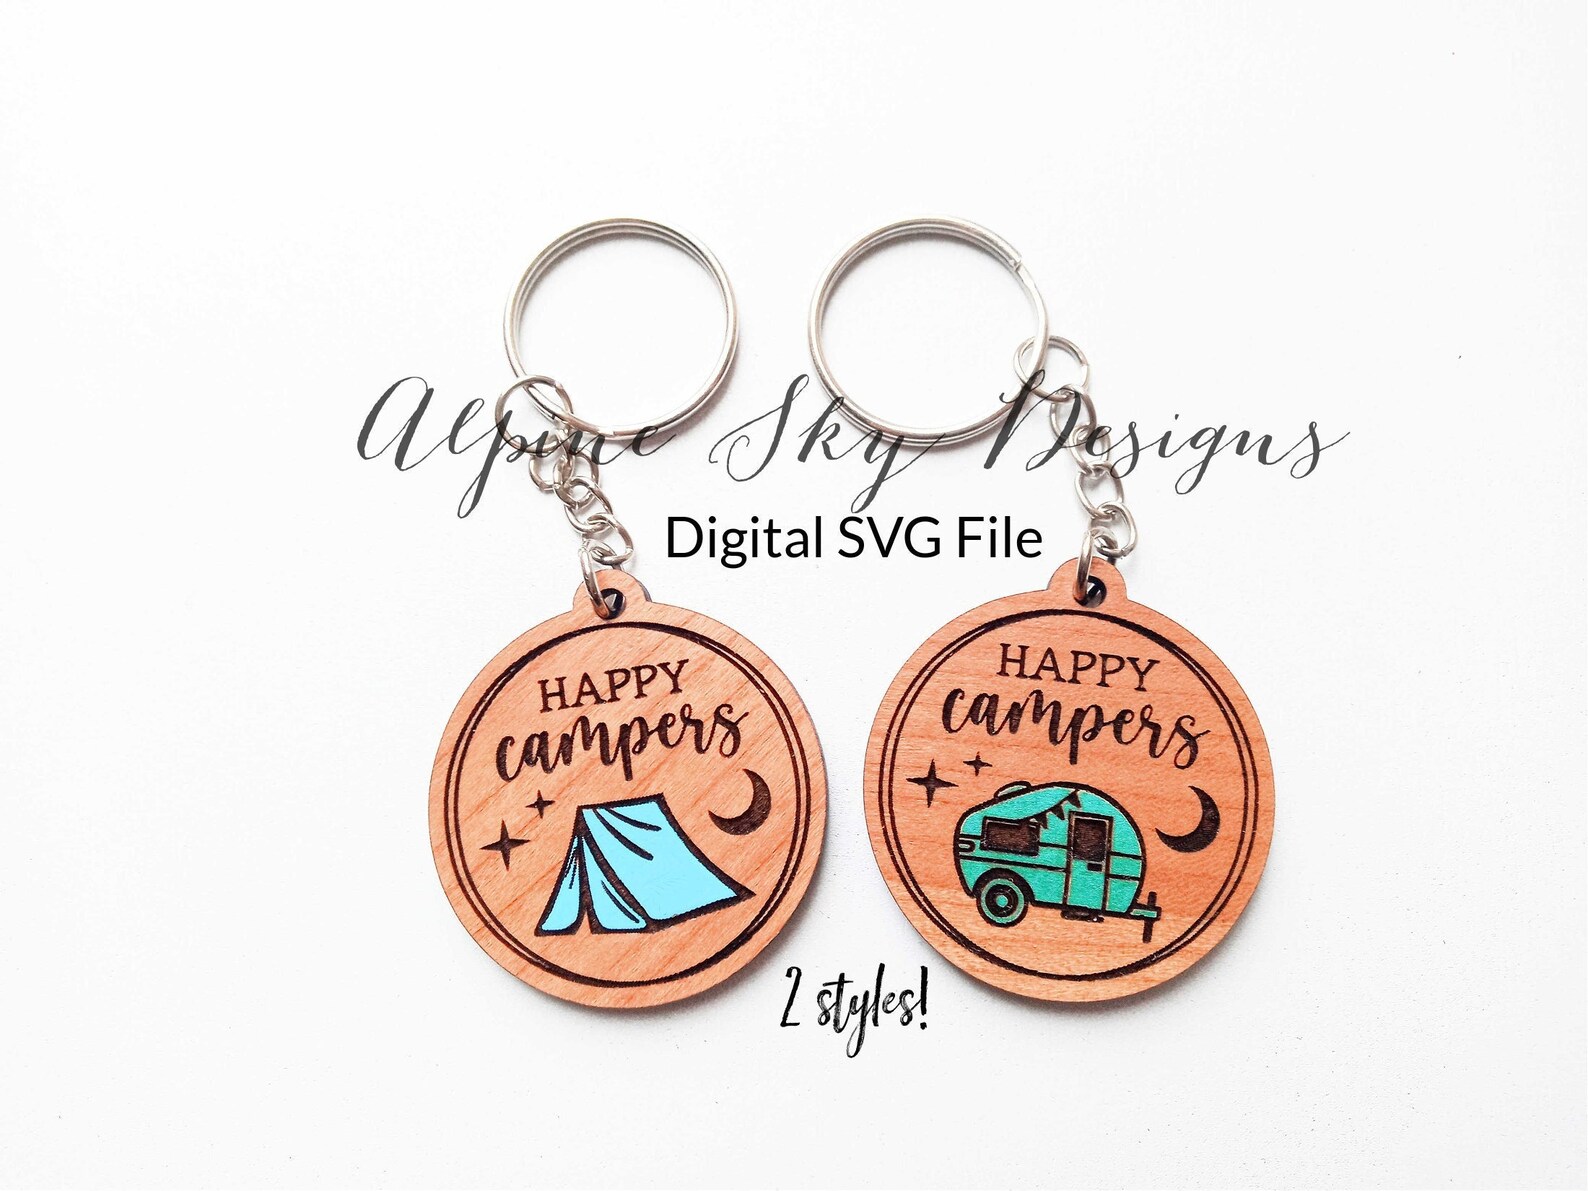 Happy Campers Keychain SVG File Glowforge Keychain Files | Etsy